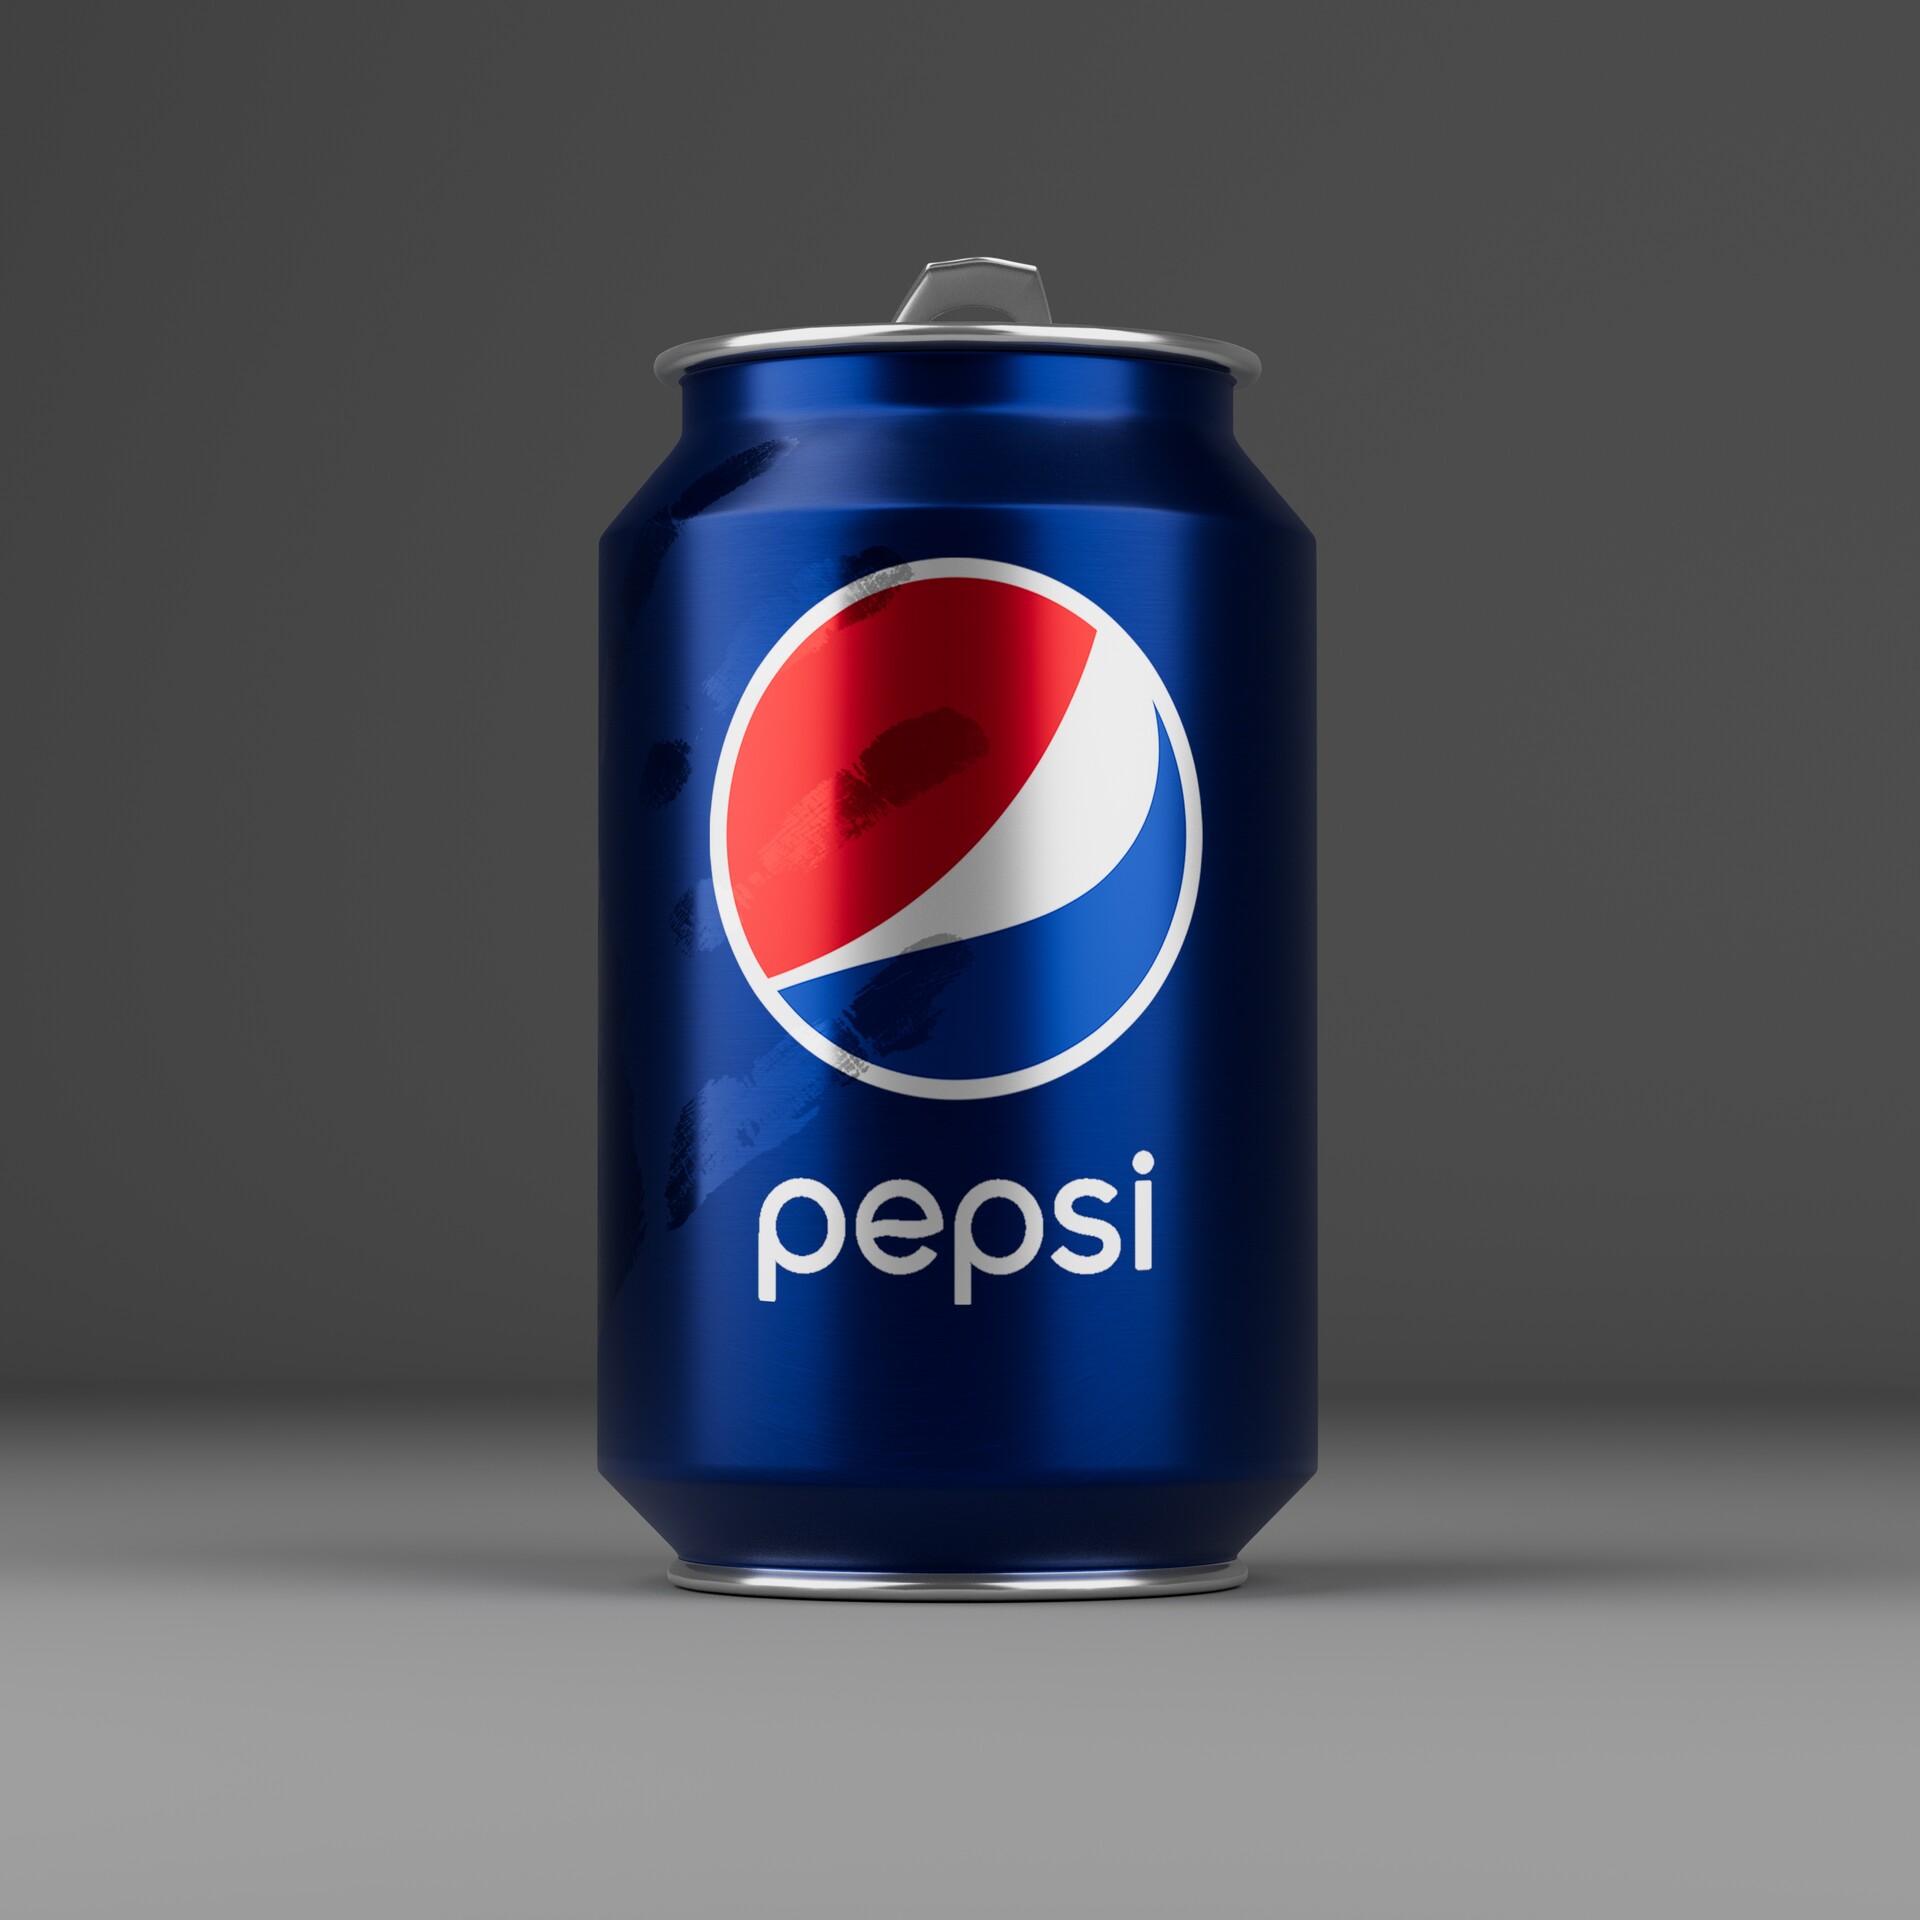 ArtStation - Pepsi Can Model